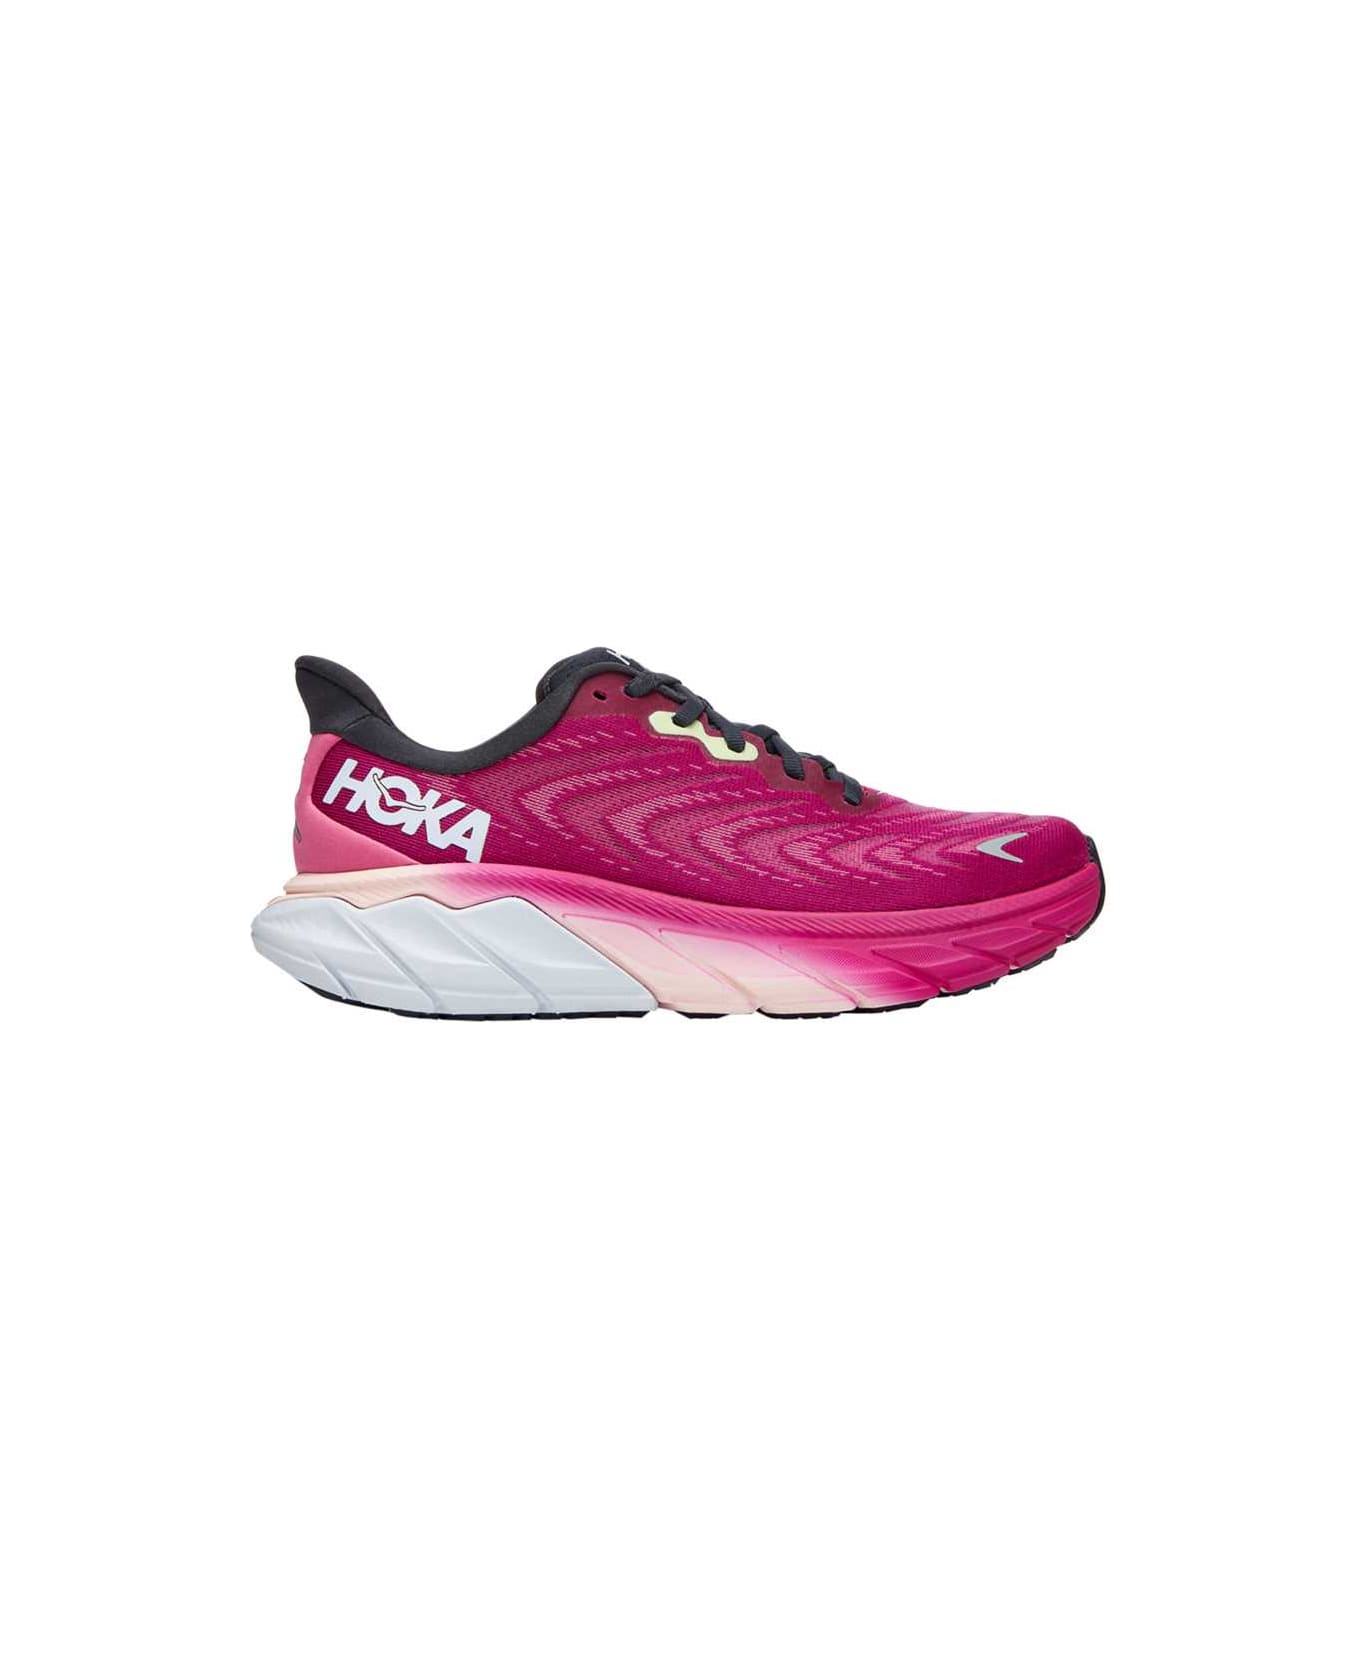 Hoka Low-top Sneakers - Pink